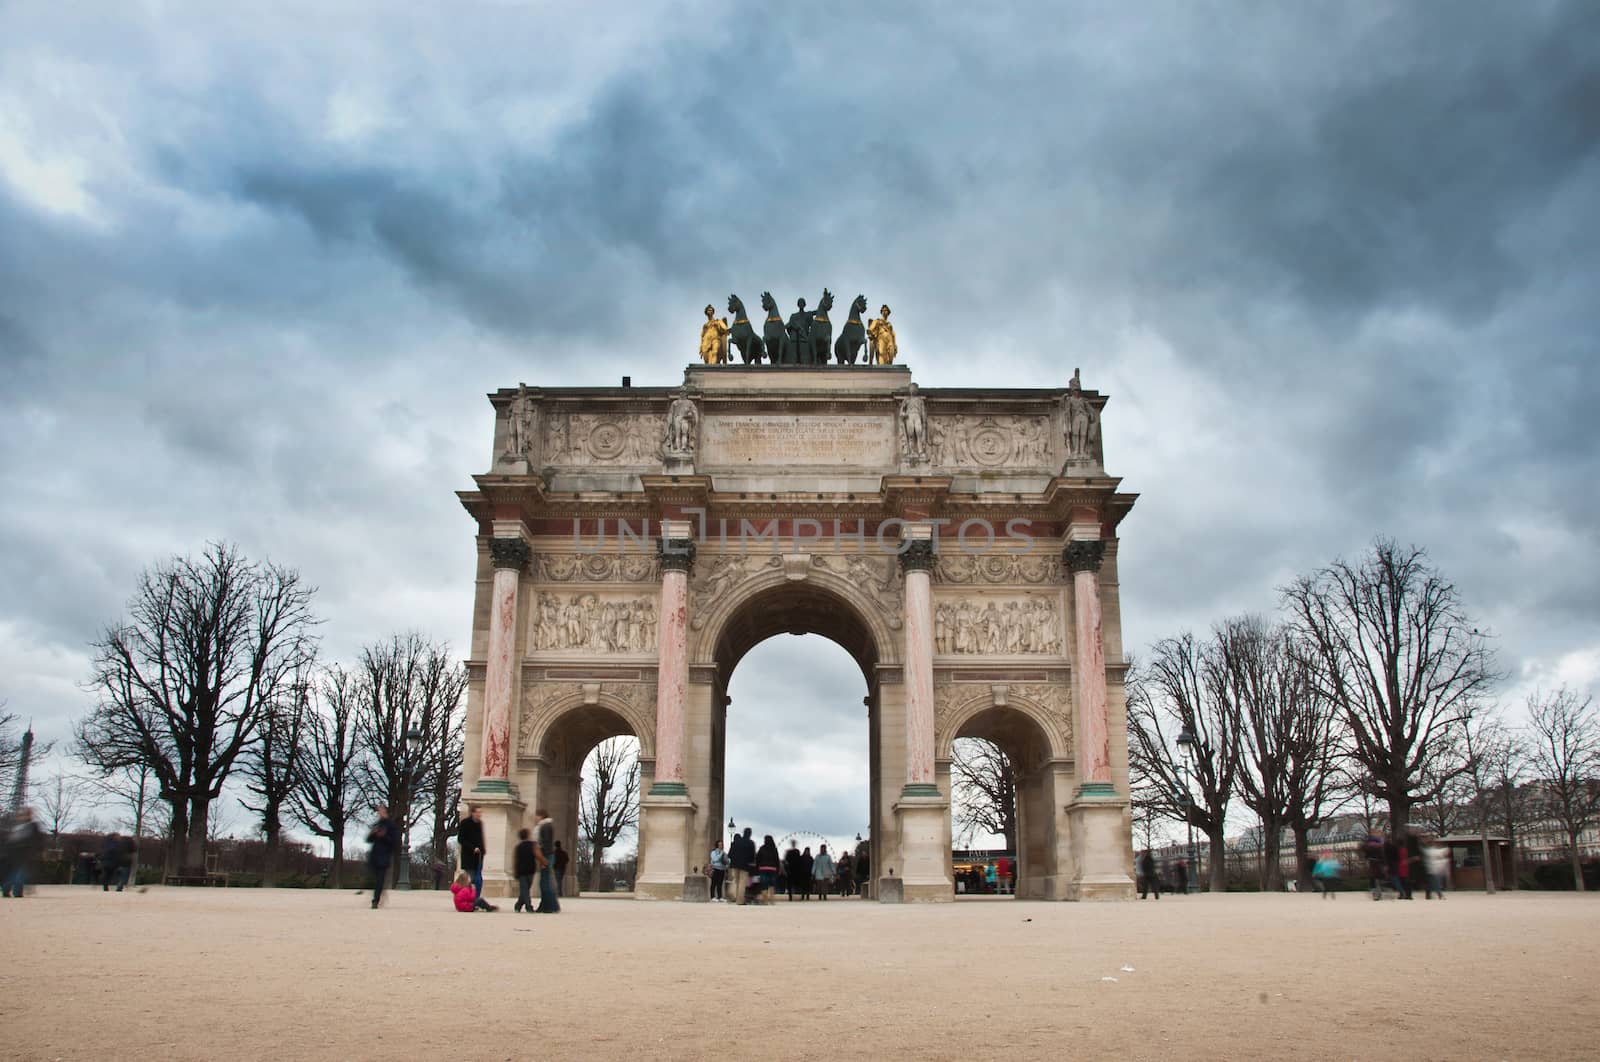 Carroussel arch in Paris